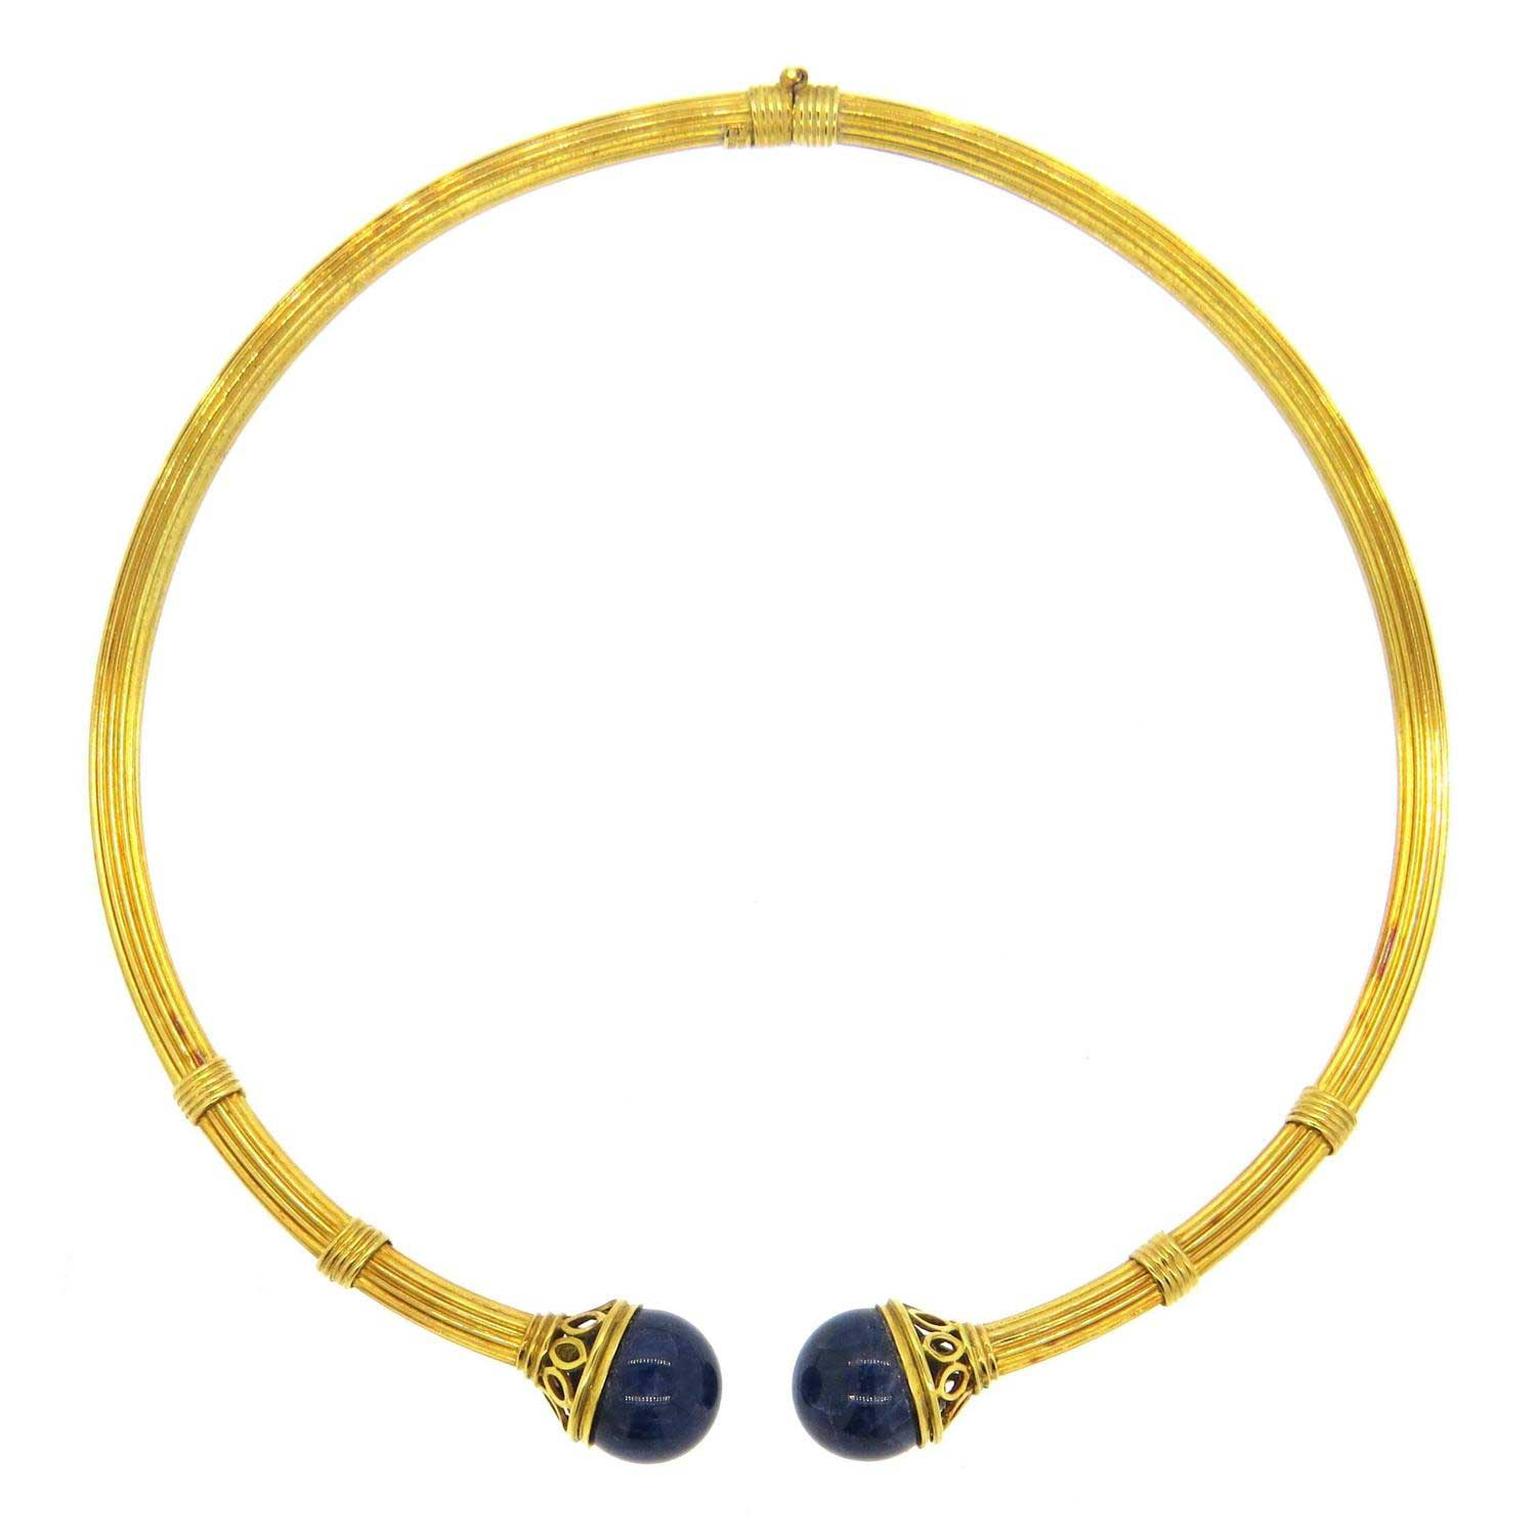 Ilias Lalaounis gold torque necklace with lapis lazuli